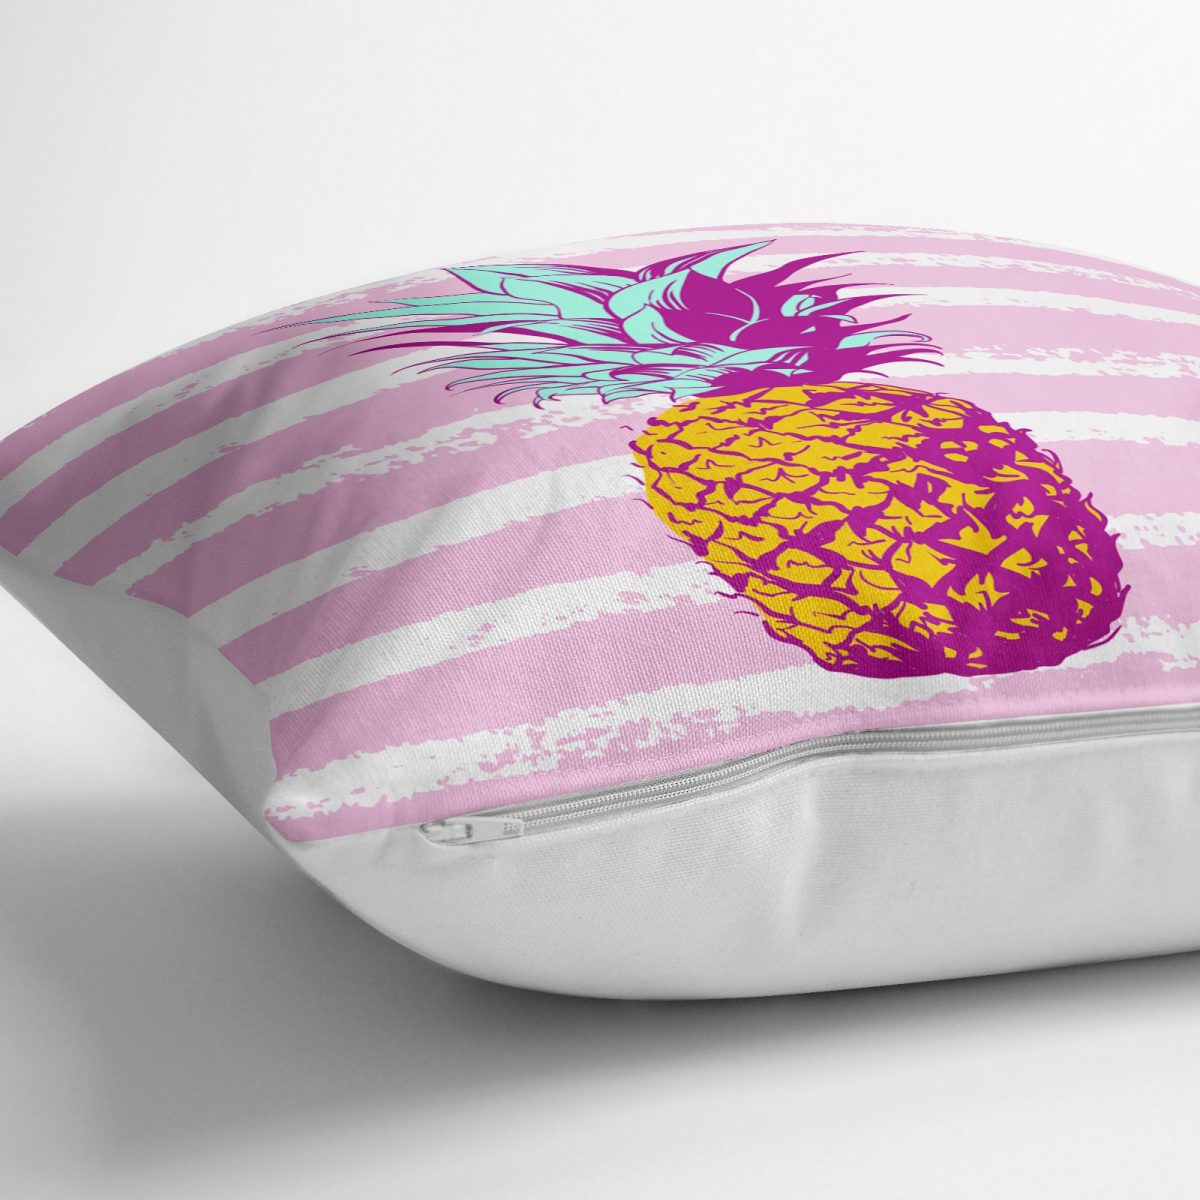 Canlı Renkli Ananas Motifli Dijital Baskılı Yer Minderi - 70 x 70 cm Realhomes